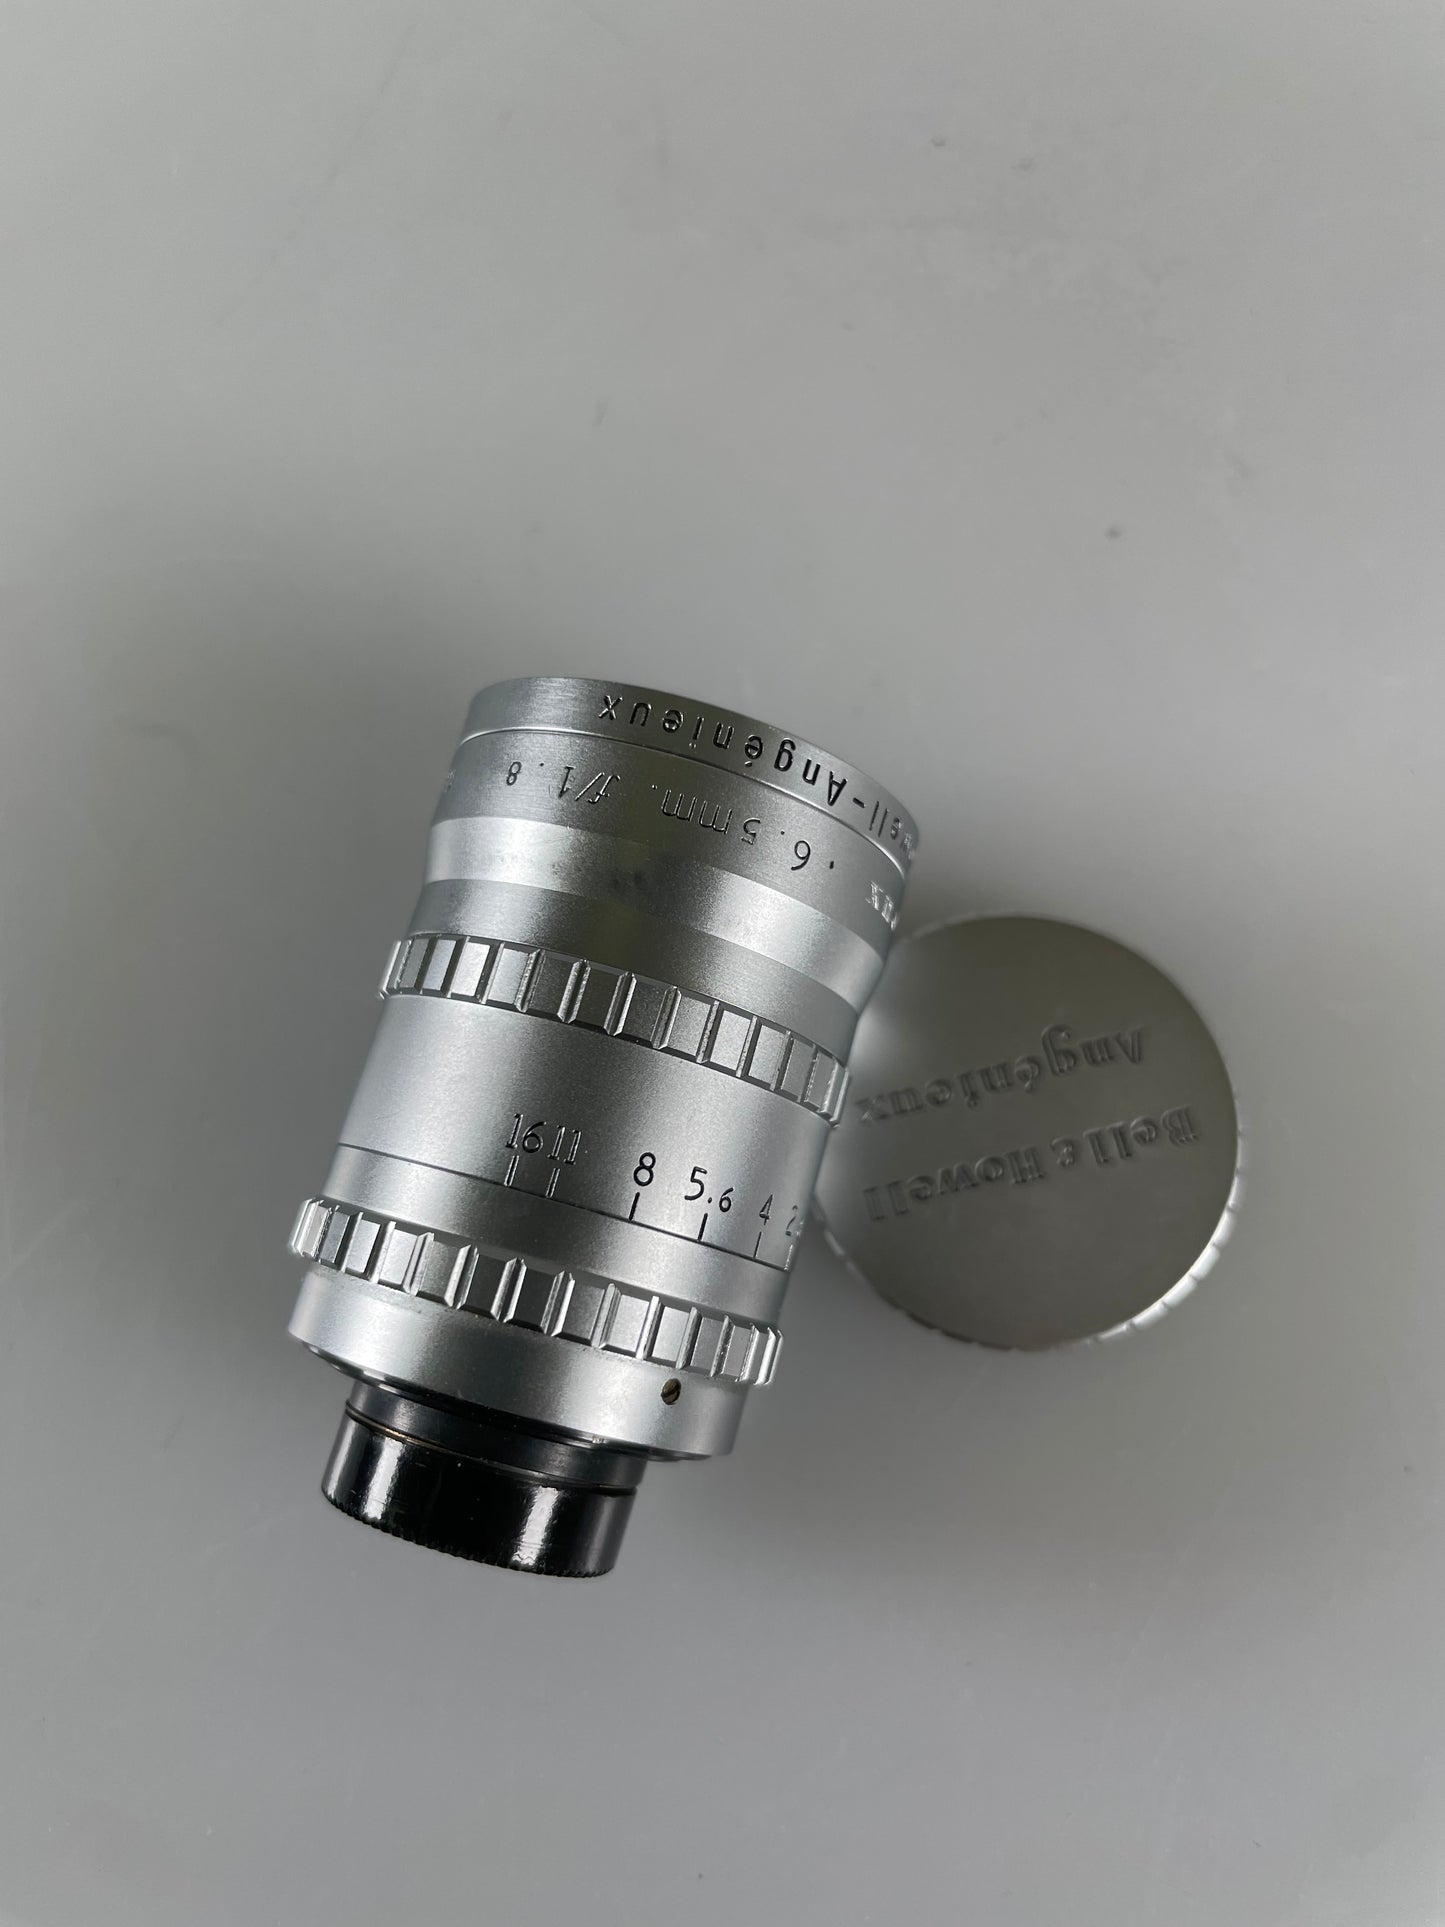 Bell & Howell Angenieux 6.5mm f1.8 Vintage Cine Movie Camera Lens D mount